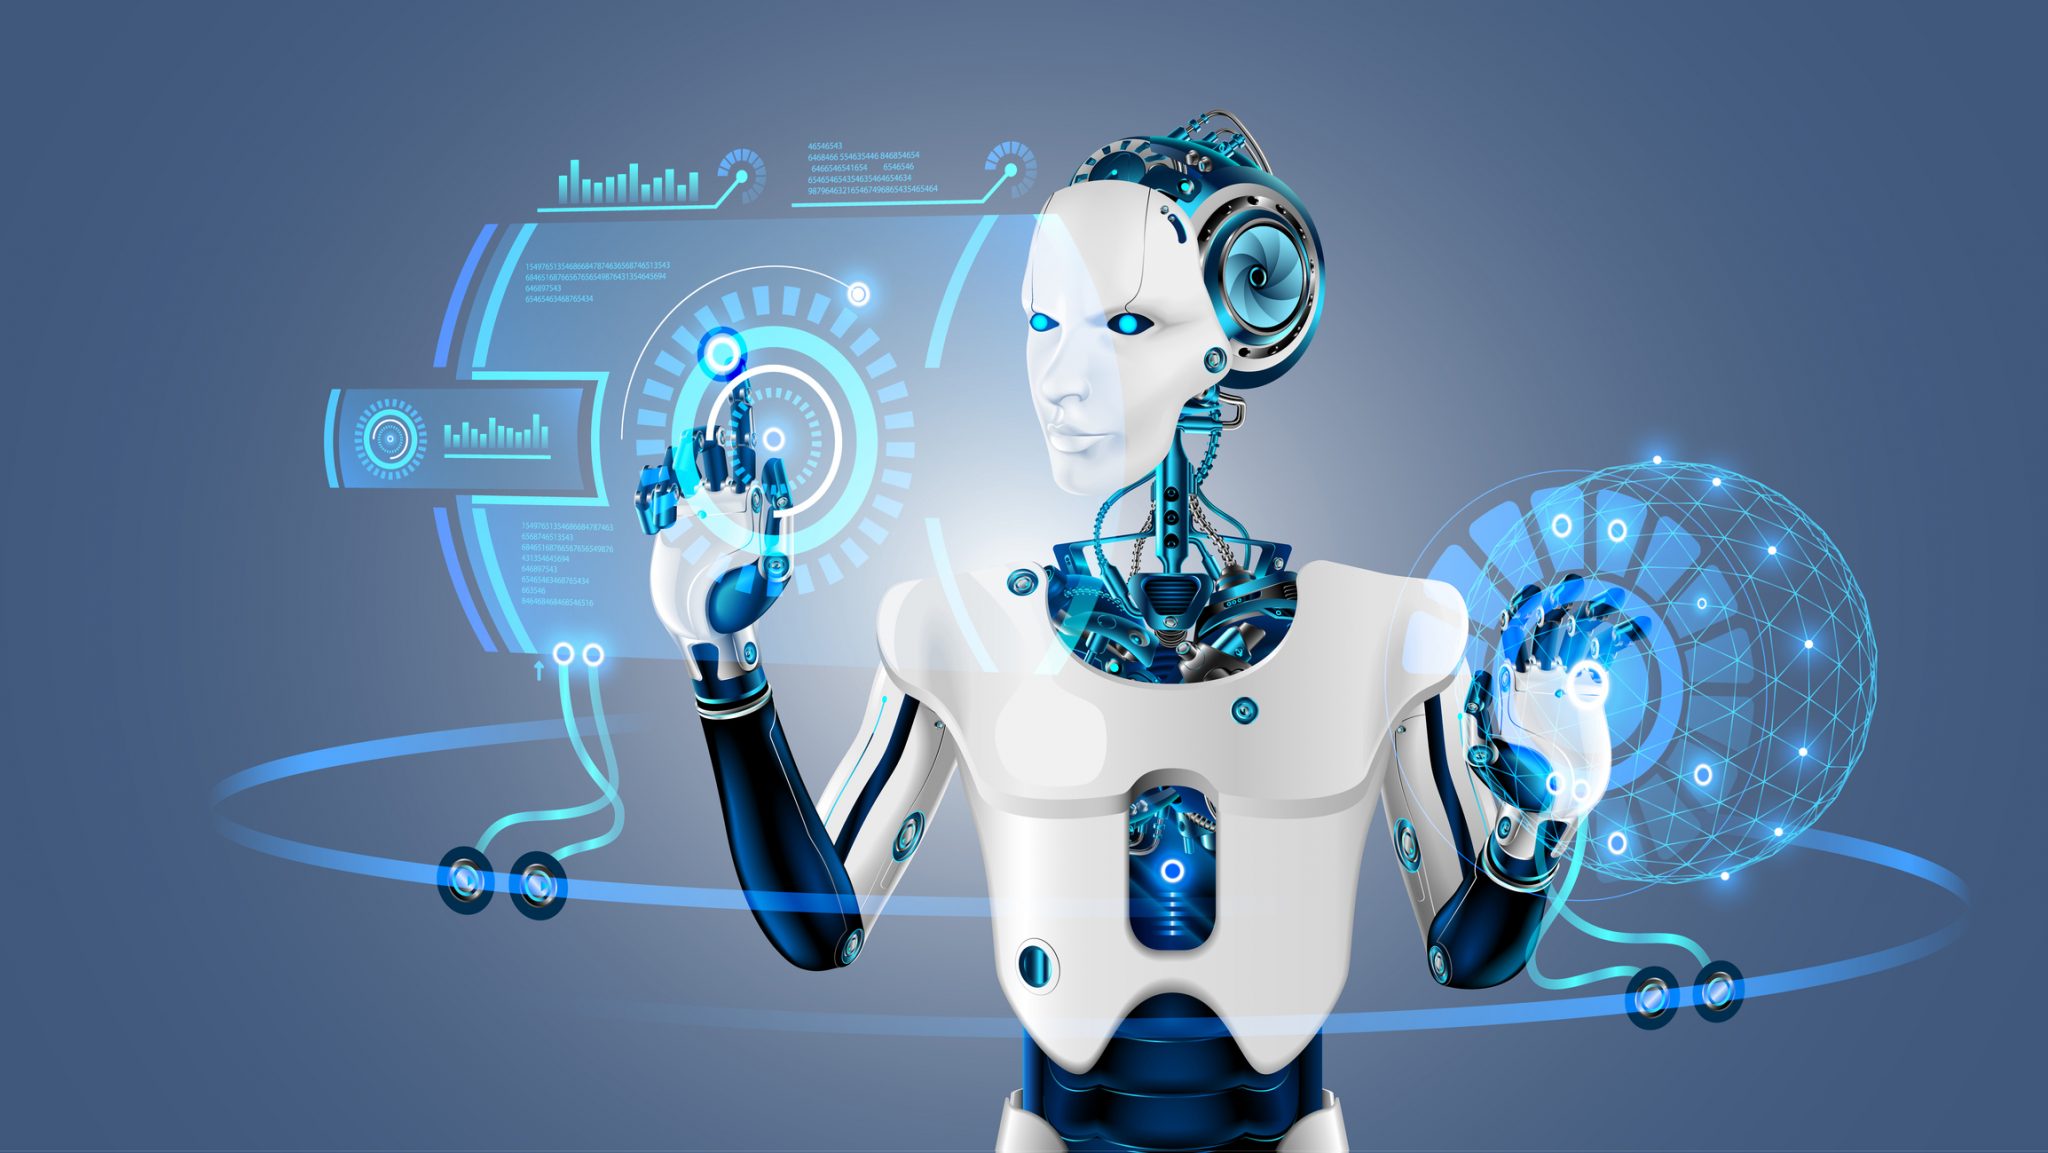 https://www.etftrends.com/wp-content/uploads/2018/11/6-Ways-Robotics-and-AI-Will-Change-the-Jobs-Market-in-2019.jpg